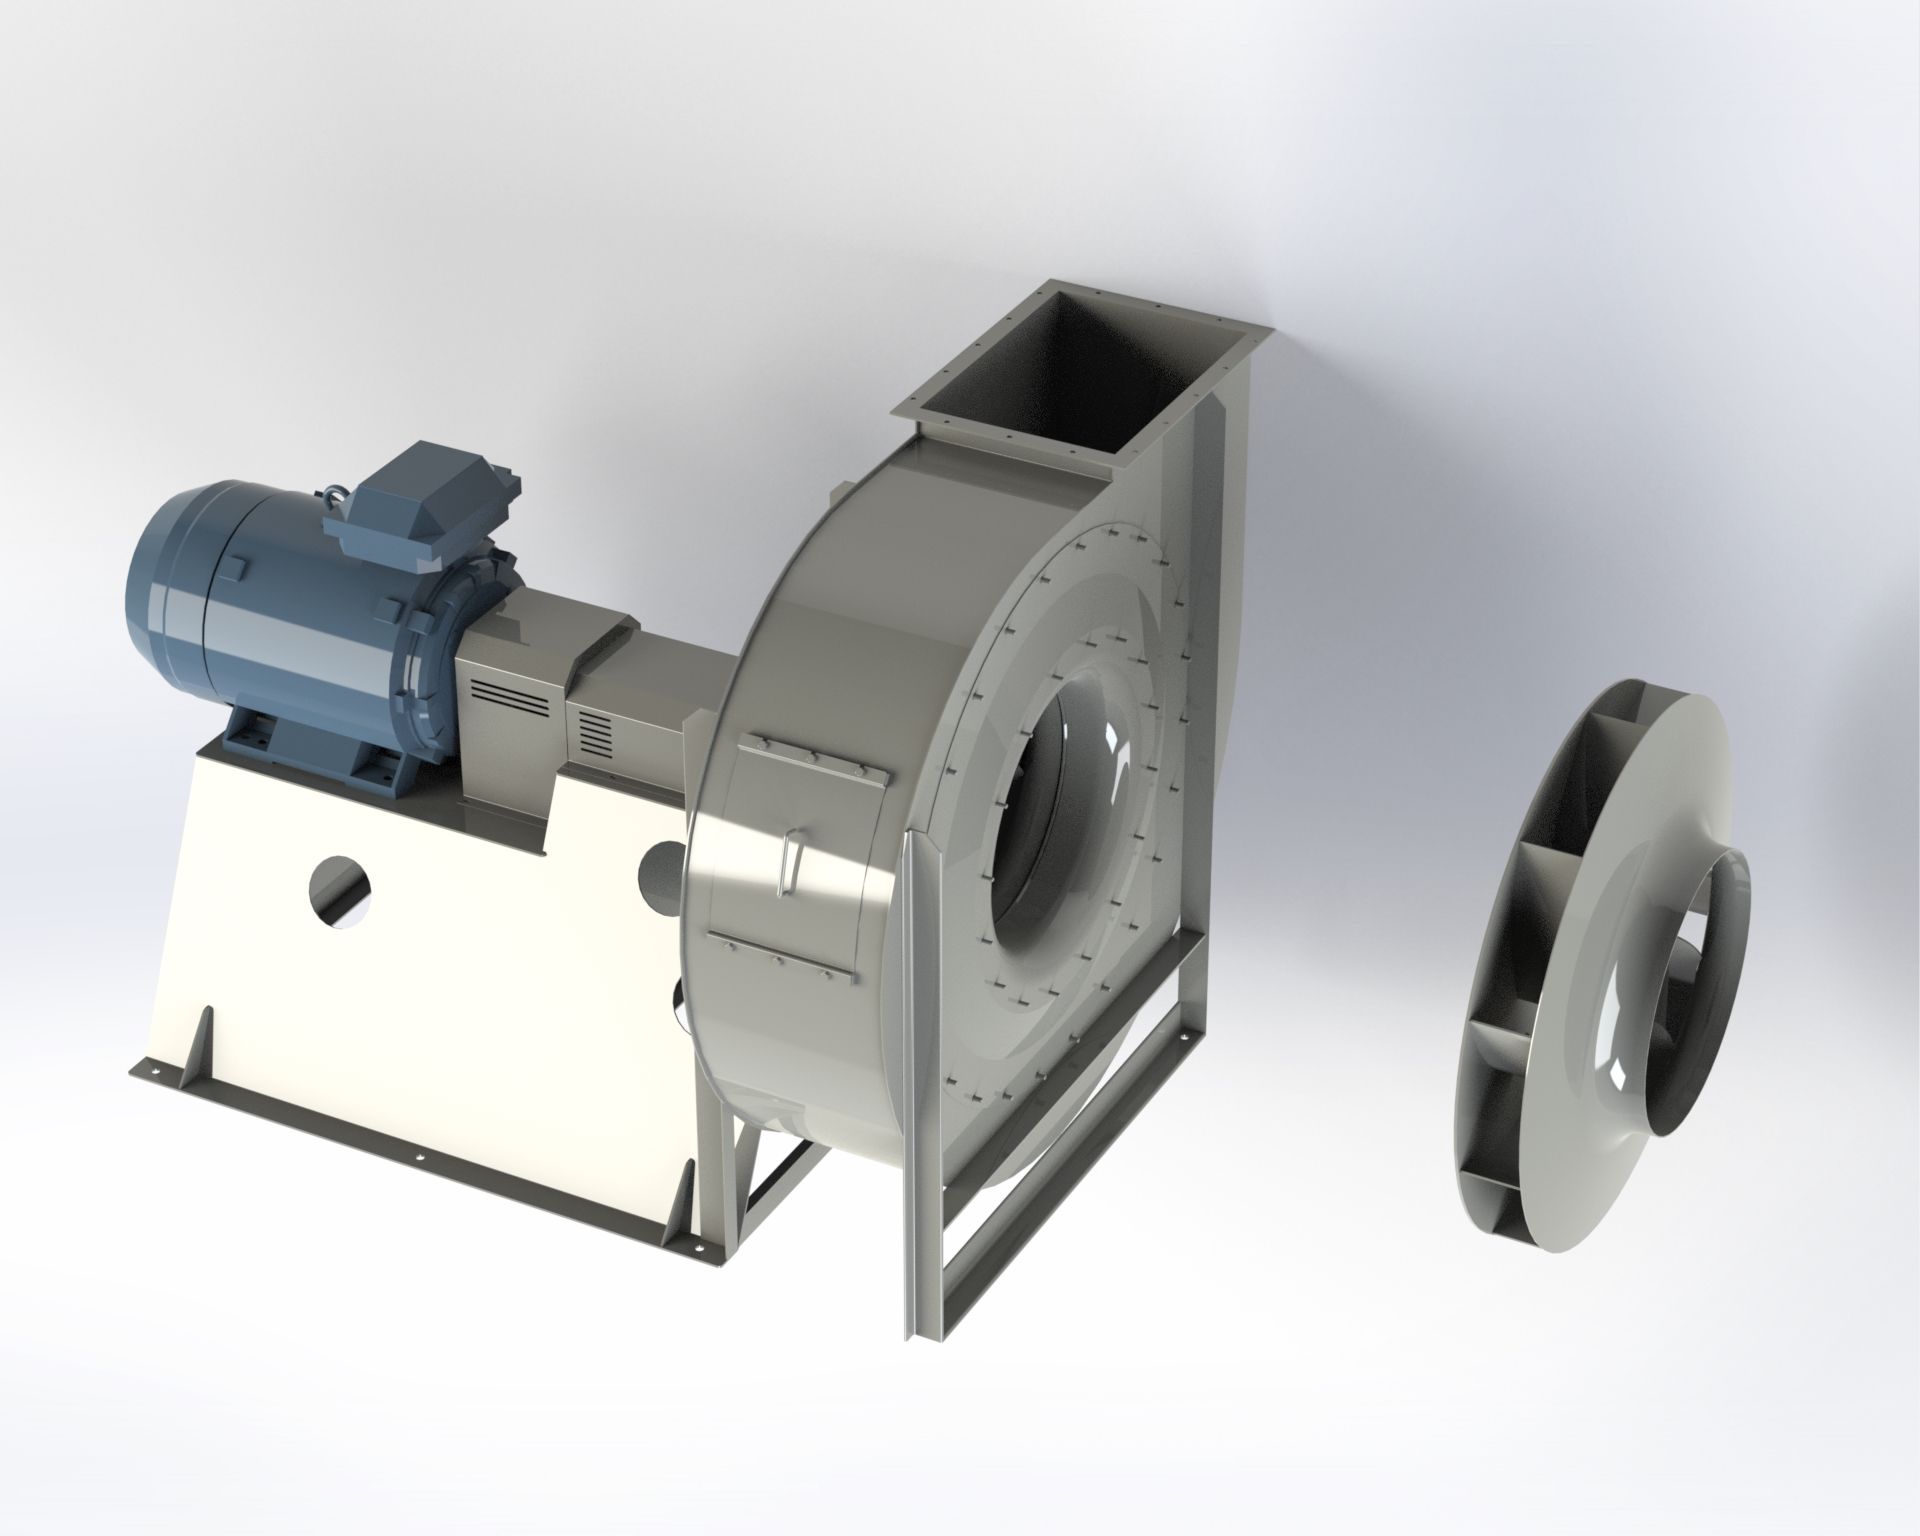 Aprh/n8 1121a - ventilateur centrifuge industriel - euroventilatori - moyenne et haute pression_0